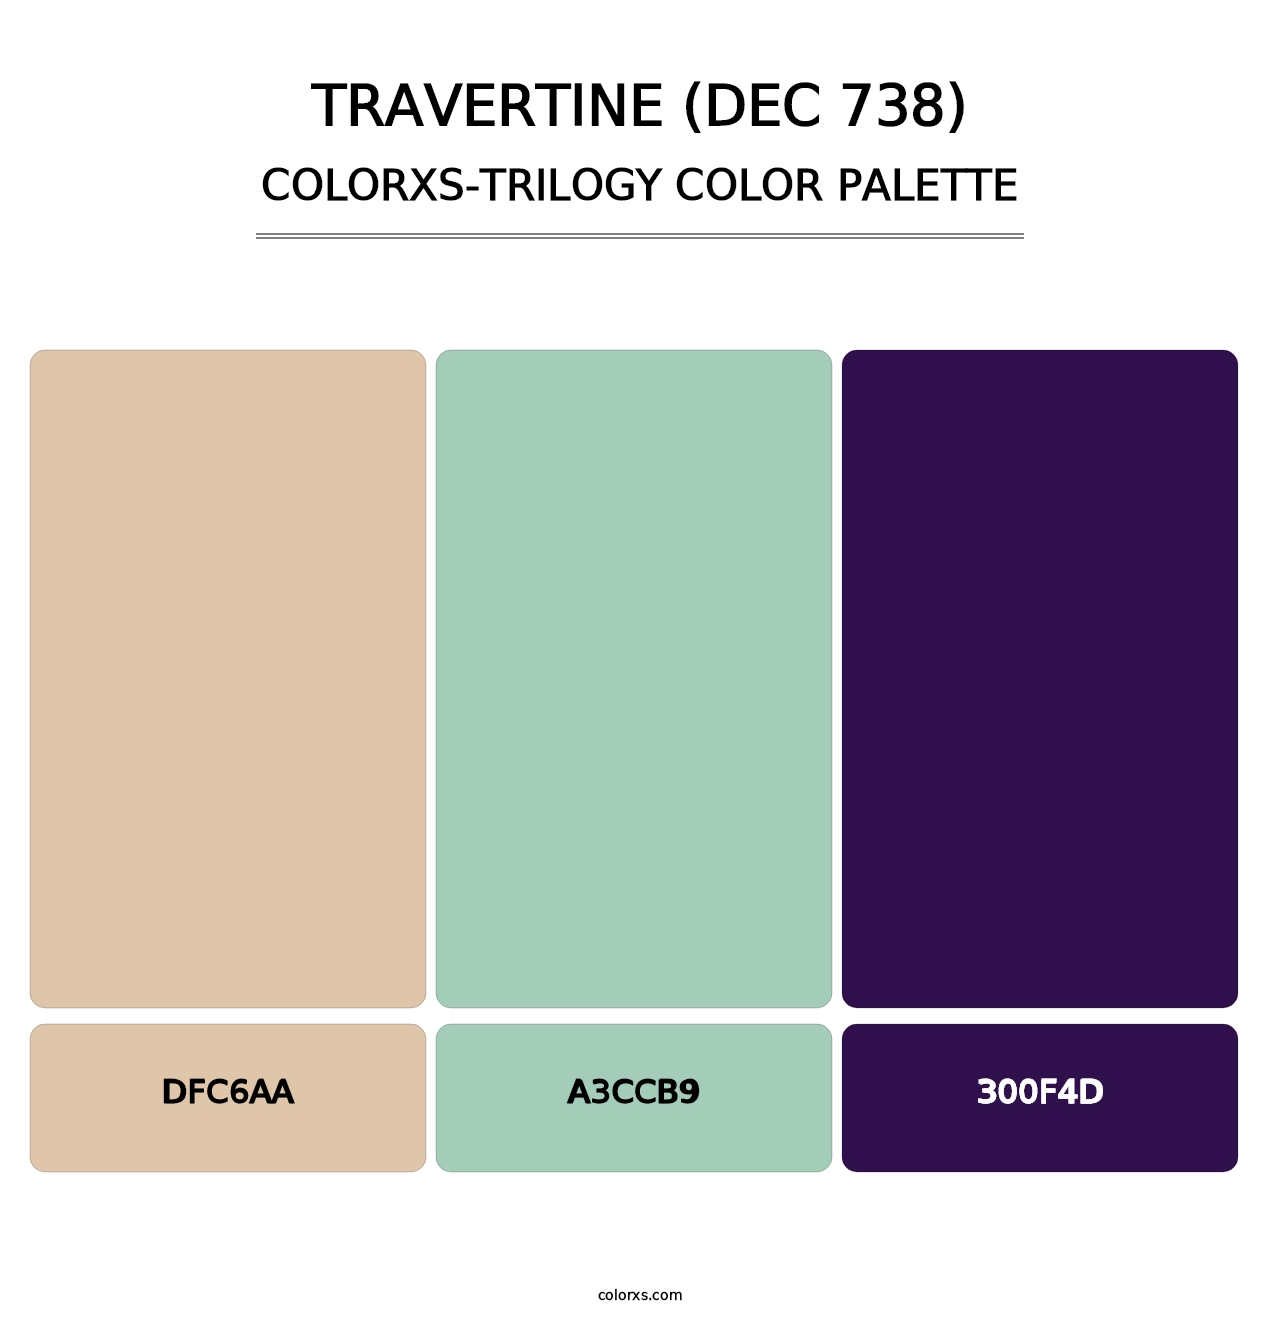 Travertine (DEC 738) - Colorxs Trilogy Palette